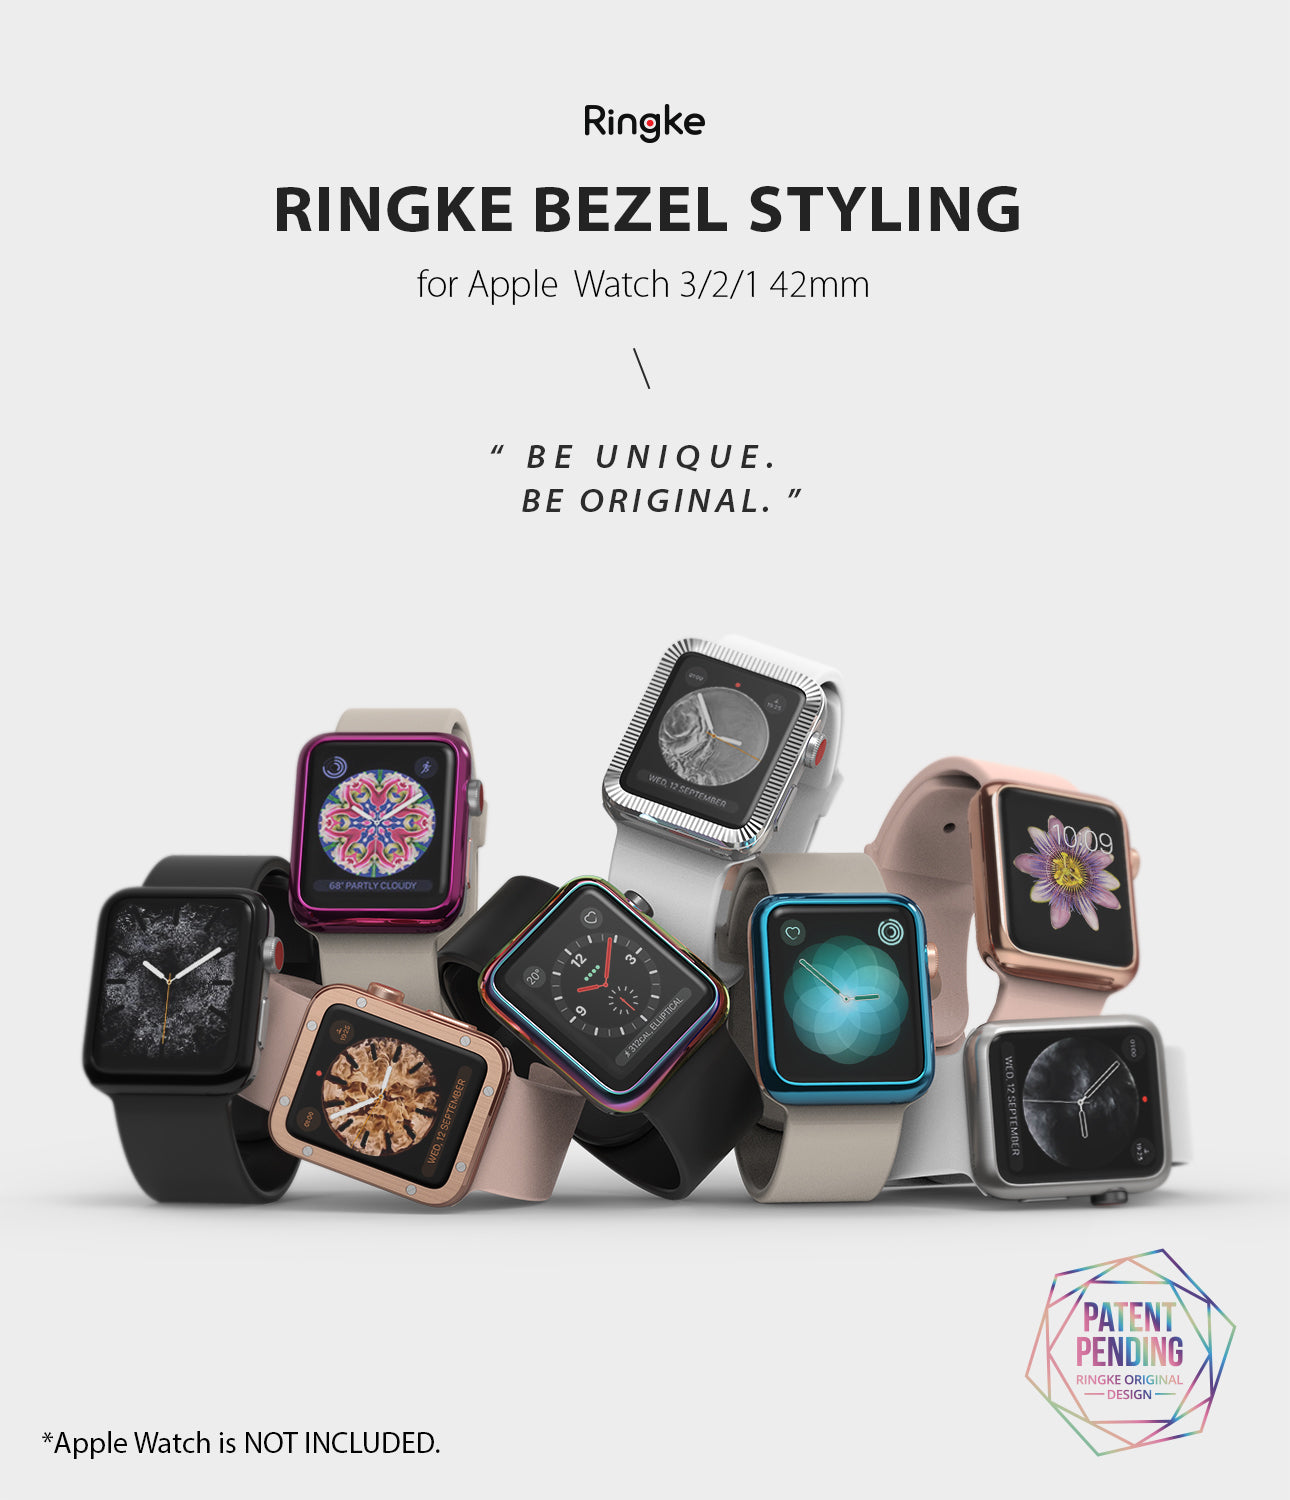 apple watch 3 2 1 42mm case ringke bezel styling stainless steel frame cover 42-43